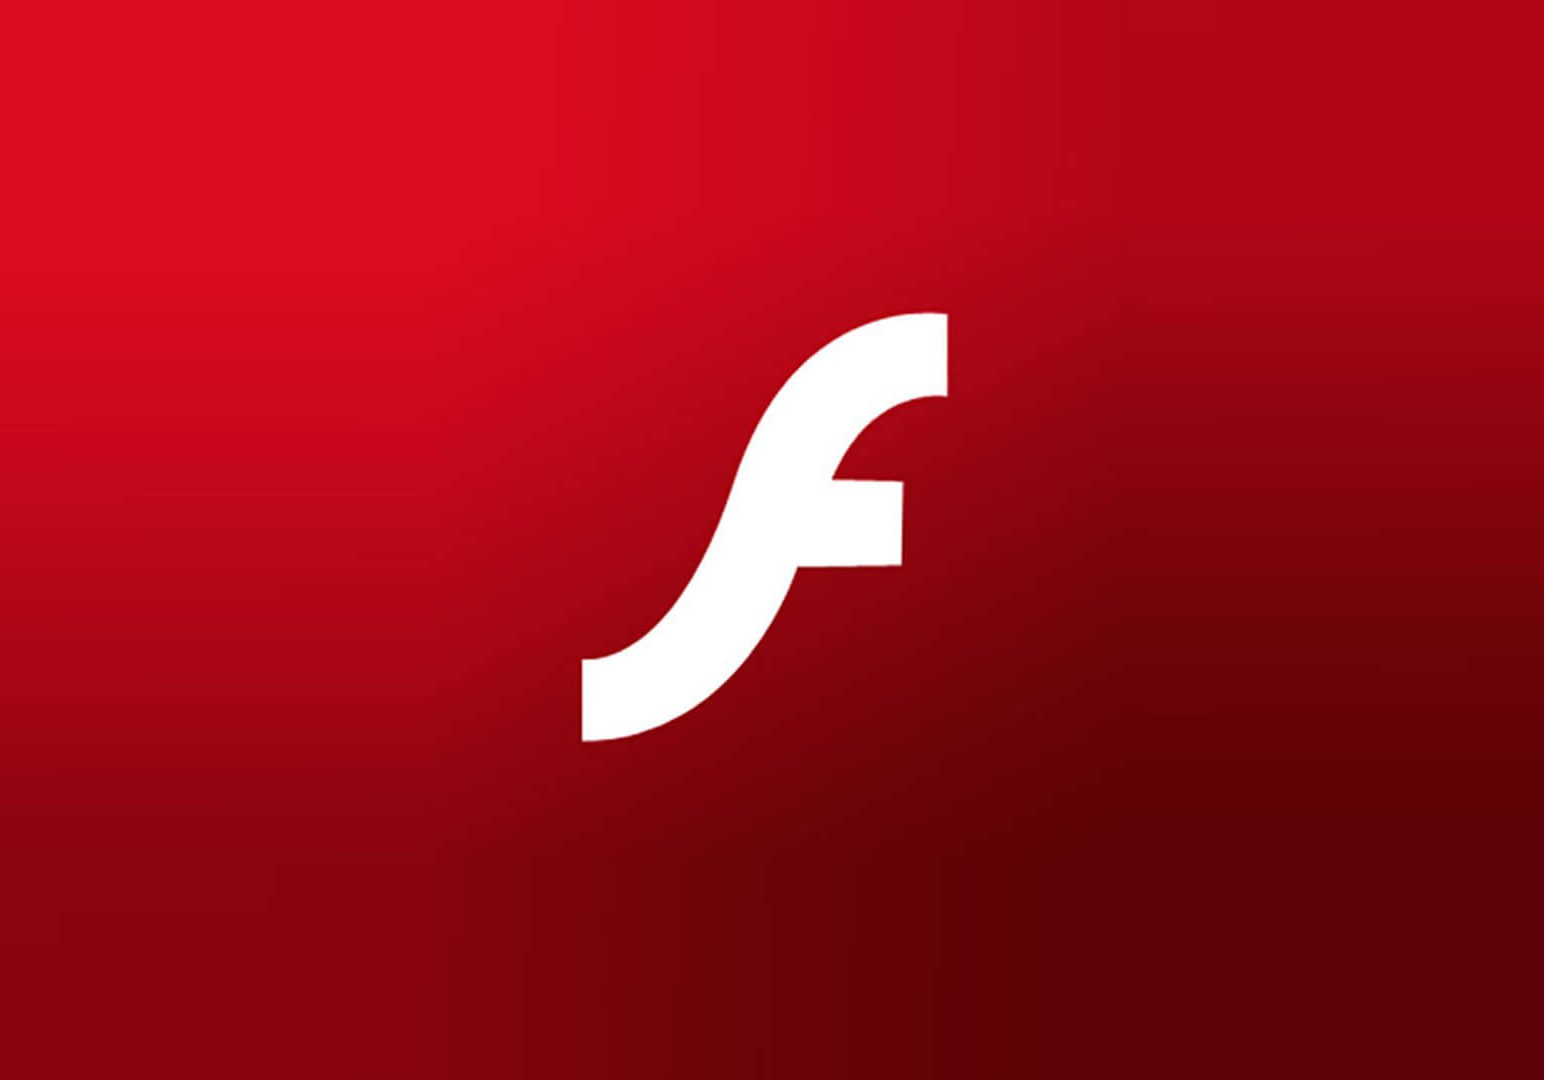 Adobe flash zero